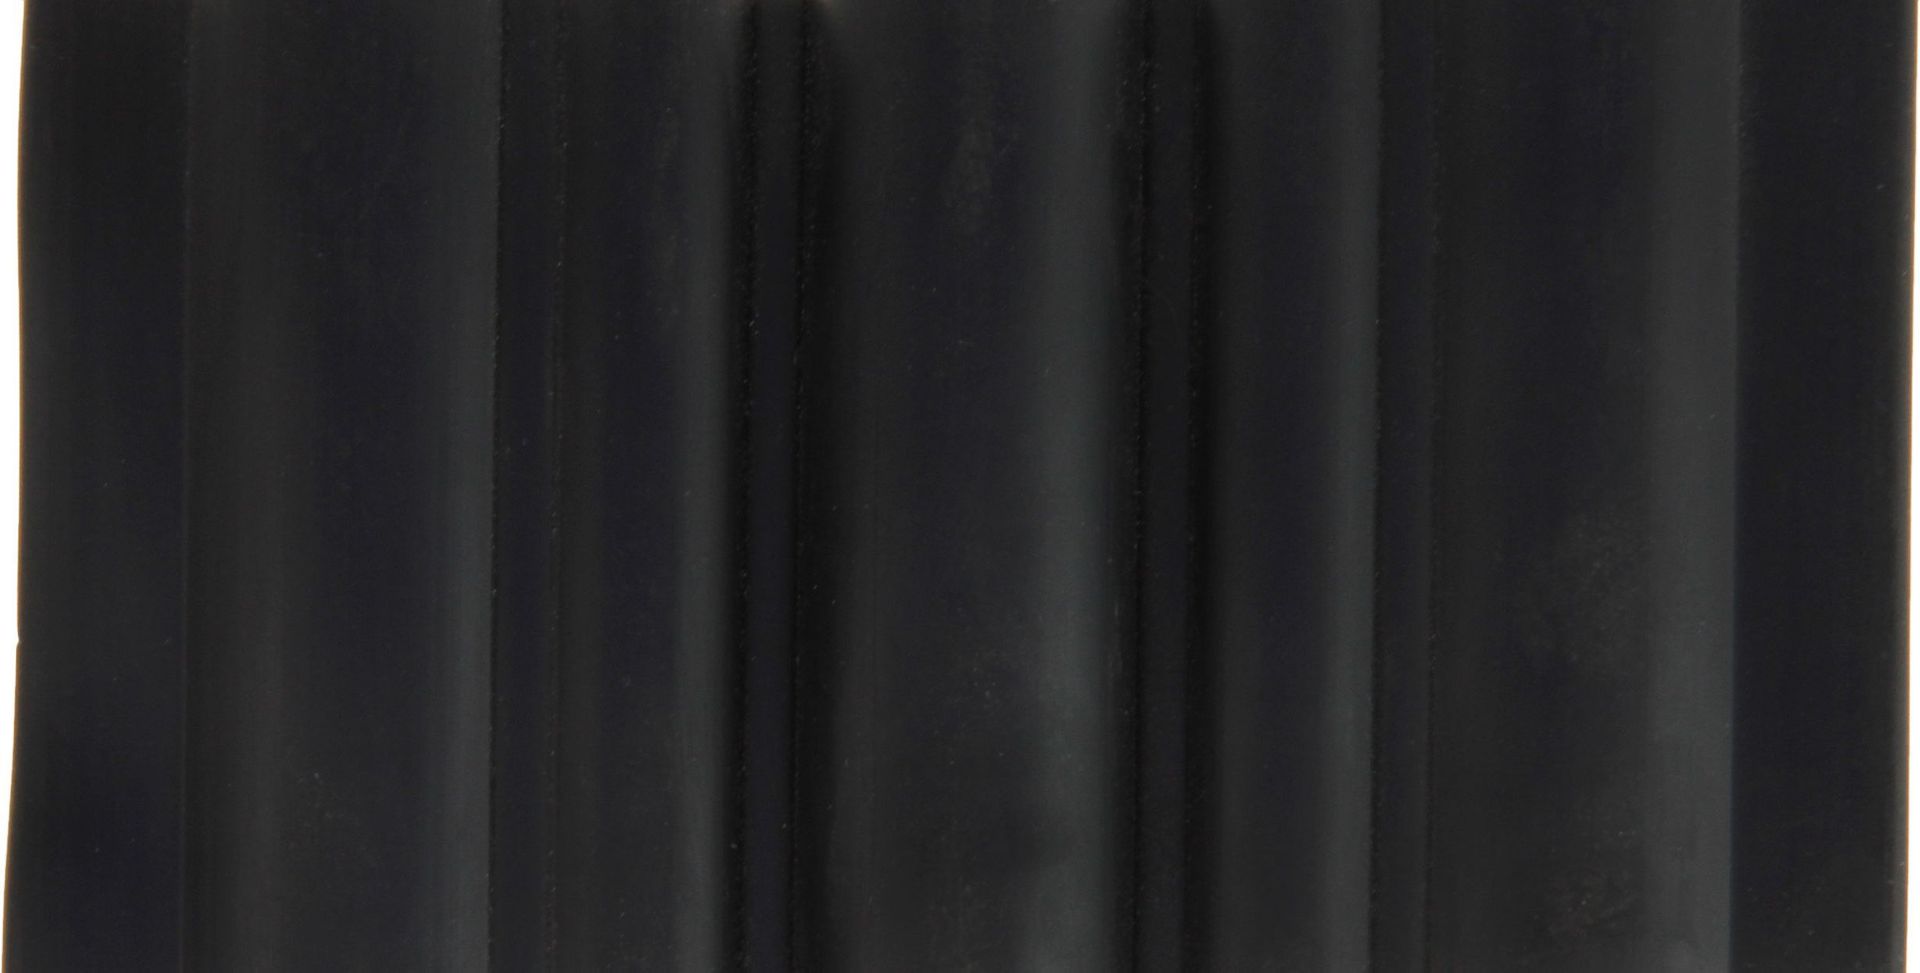 Лента дублирующая, черная, 120 мм SSCL00008603 лента дублирующая черная 120 мм sscl00008603